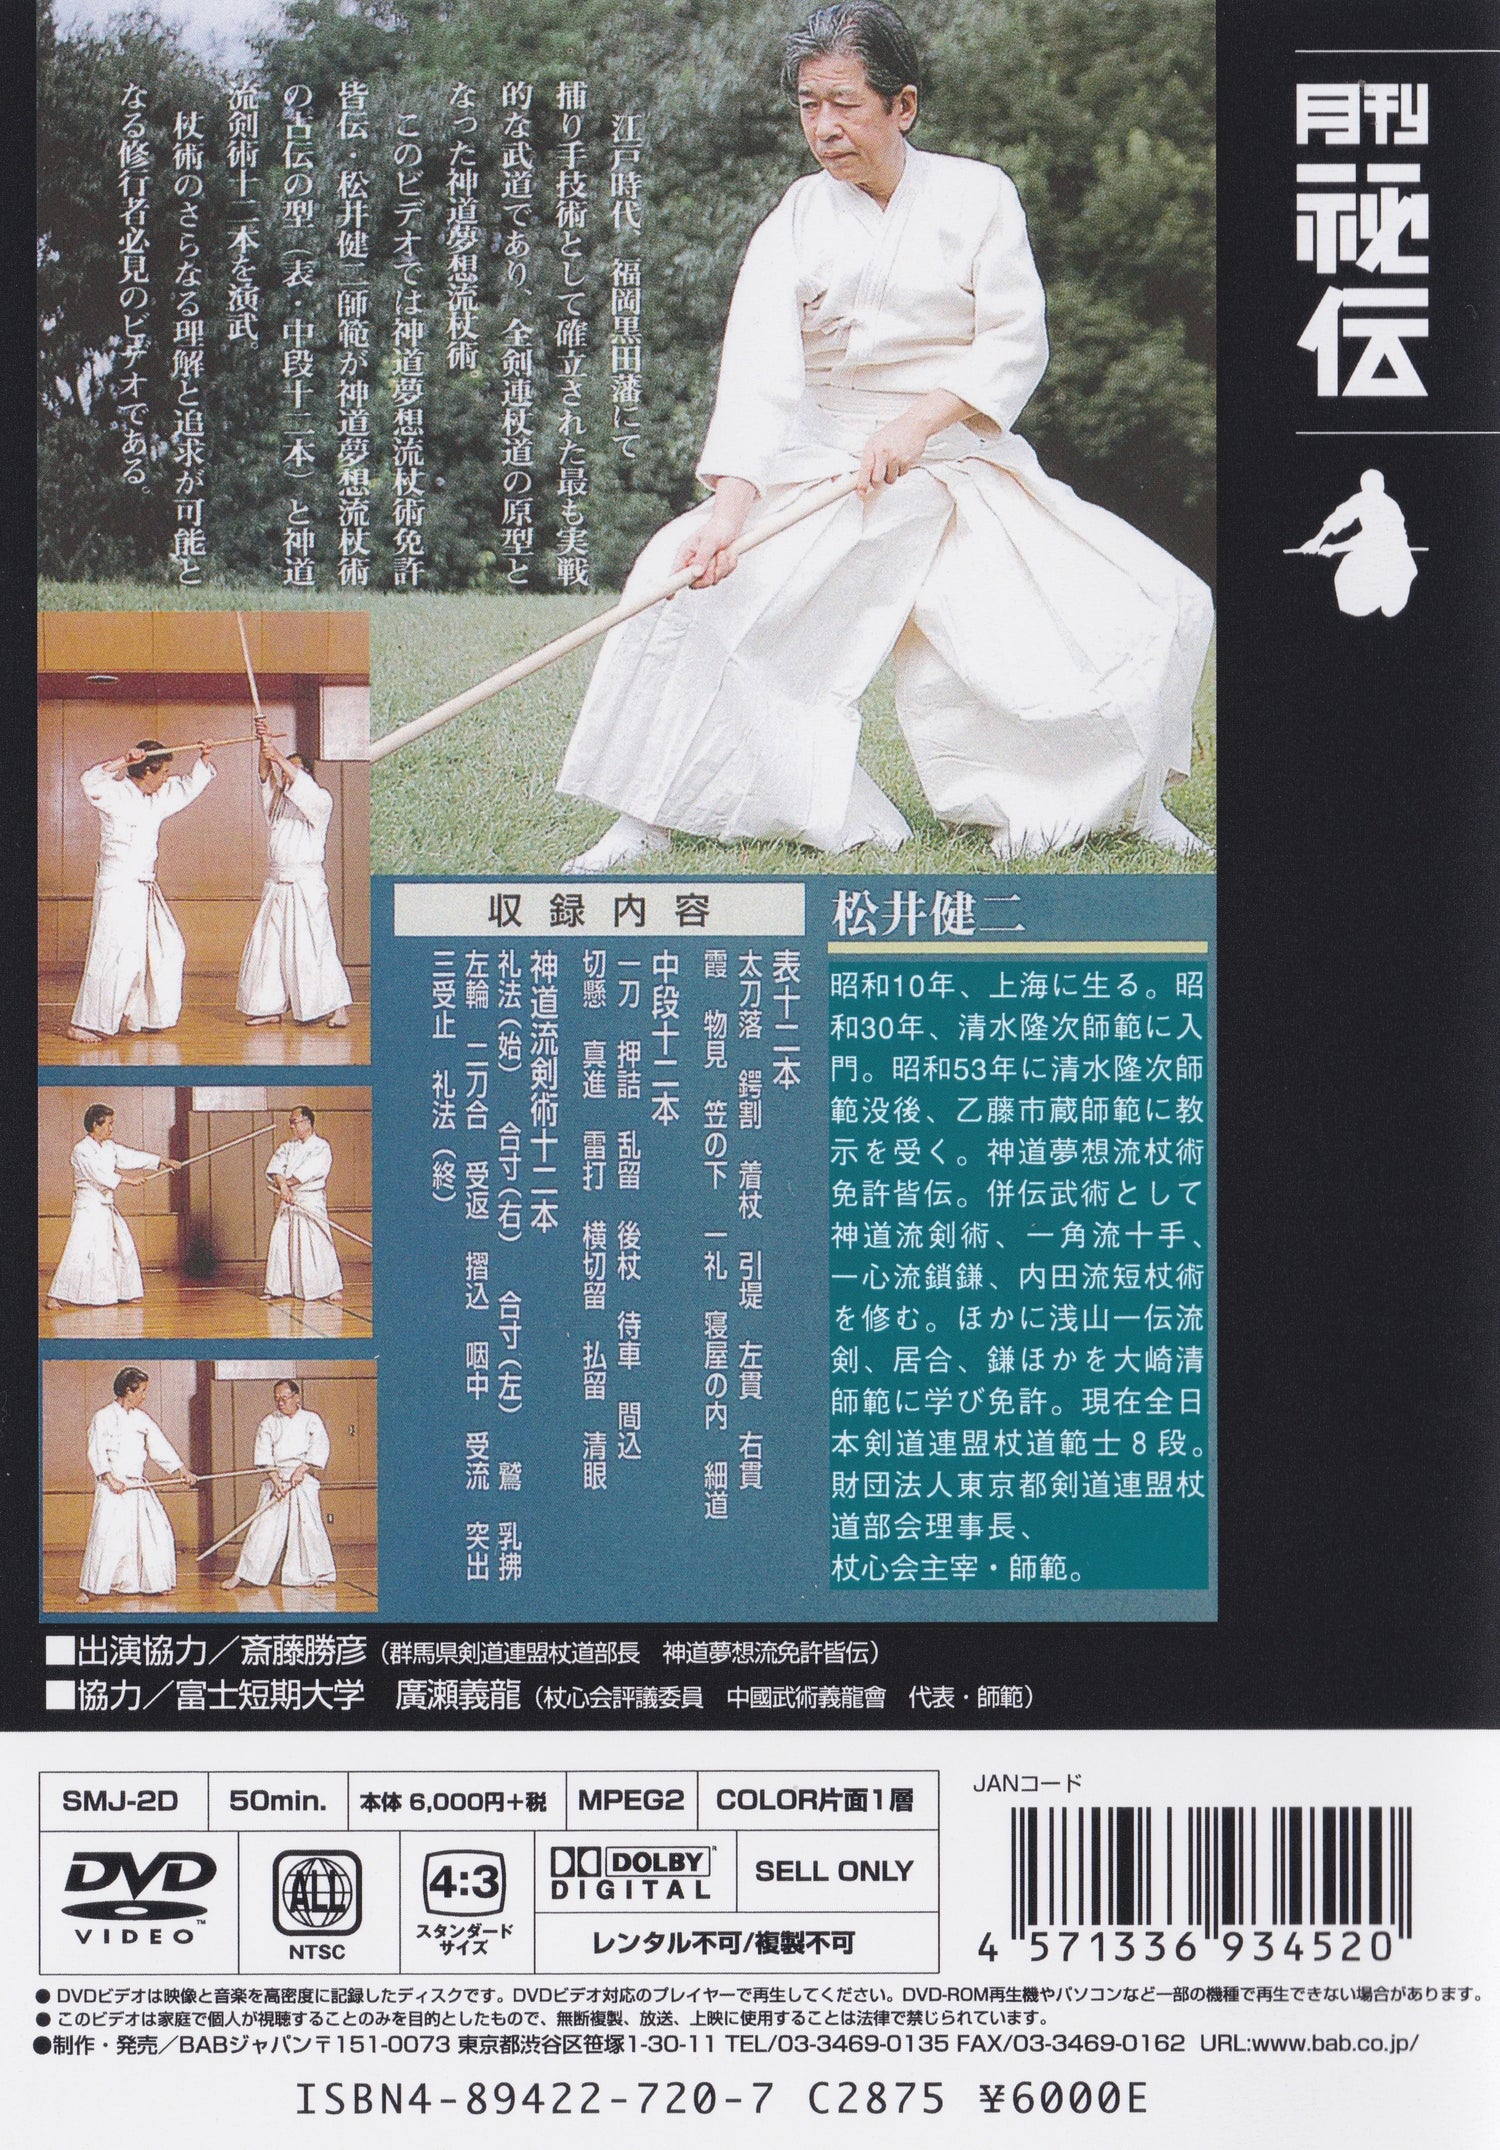 Shinto Muso Ryu: Habilidades técnicas Vol 2 de Kenji Matsui DVD